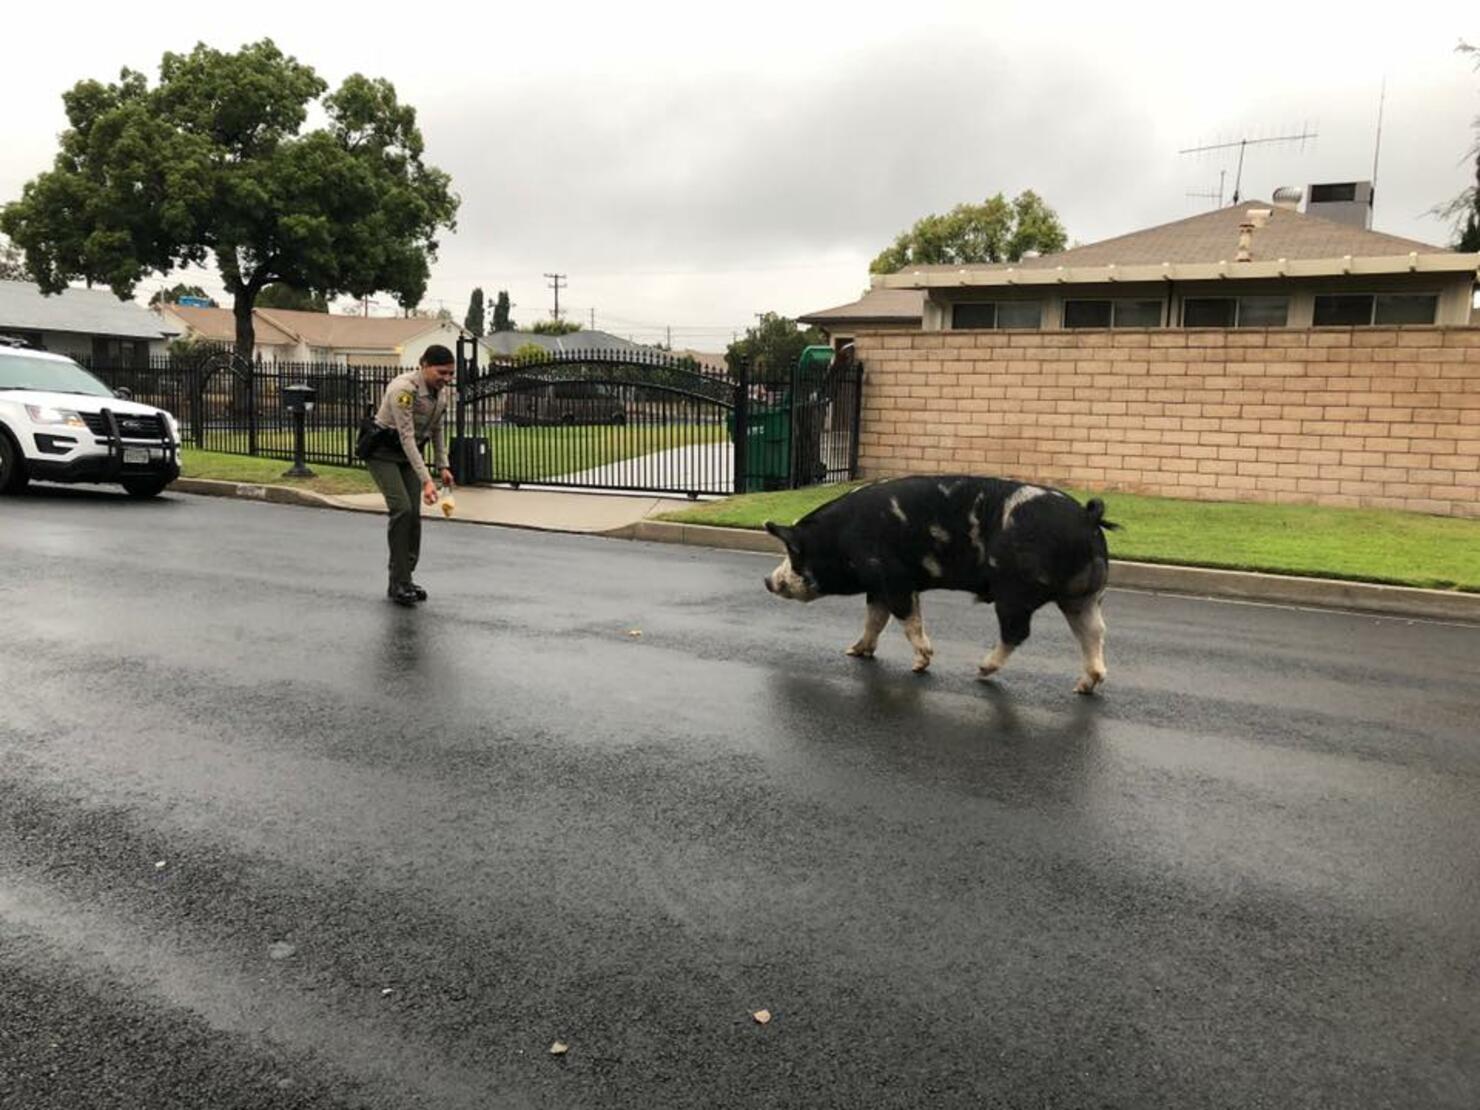 Police in San Bernardino use doritos to lure pig back home